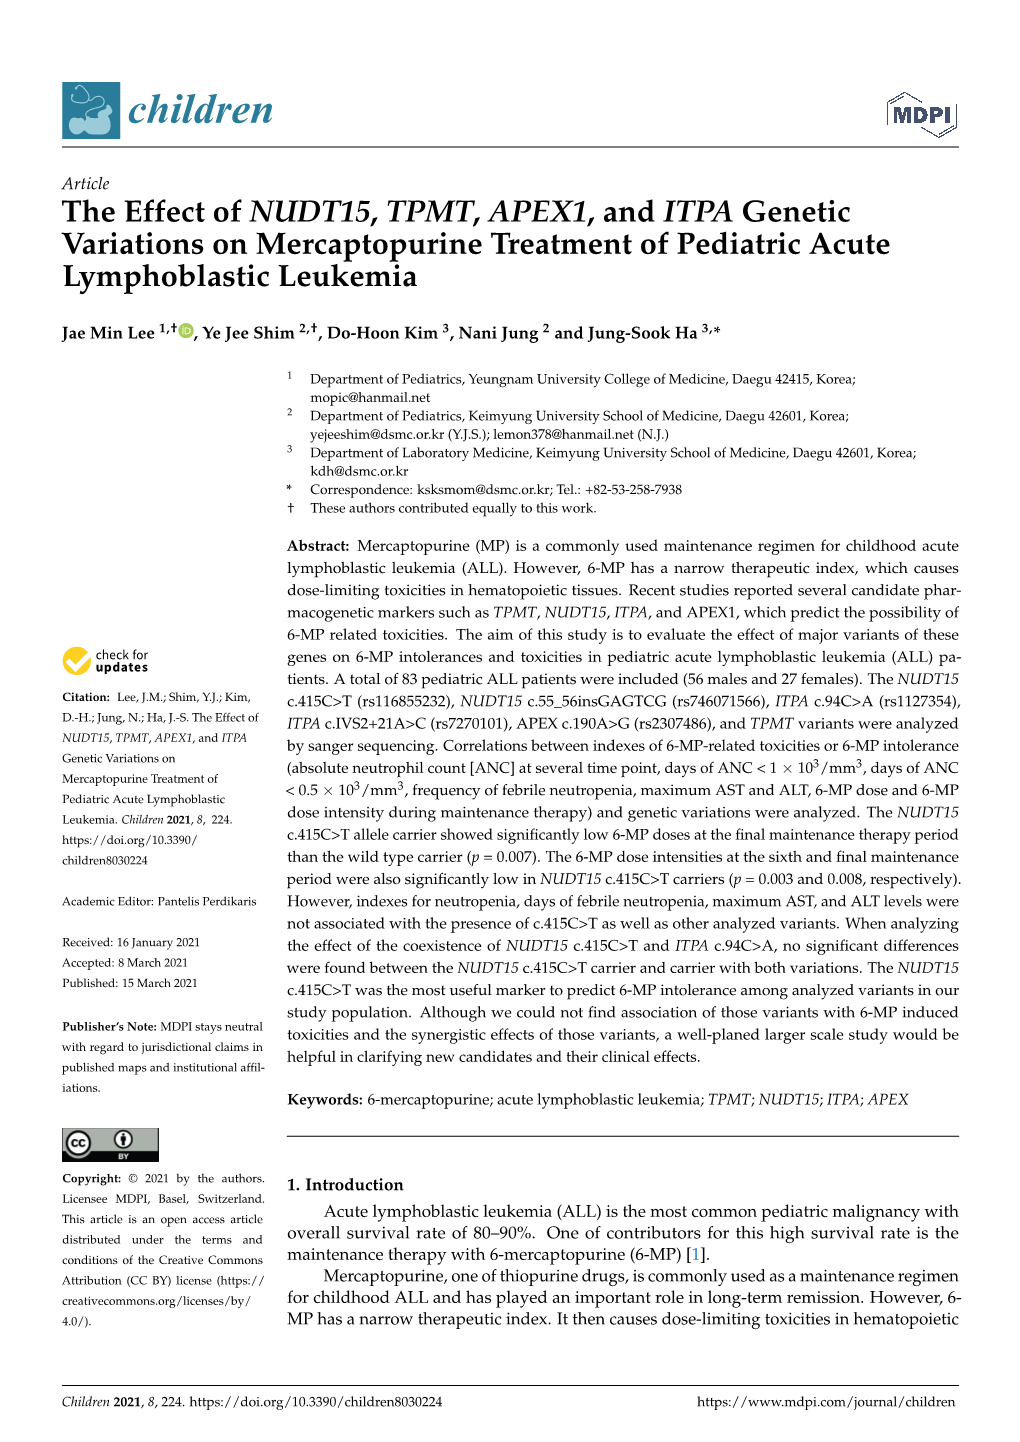 The Effect of NUDT15, TPMT, APEX1, and ITPA Genetic Variations on Mercaptopurine Treatment of Pediatric Acute Lymphoblastic Leukemia